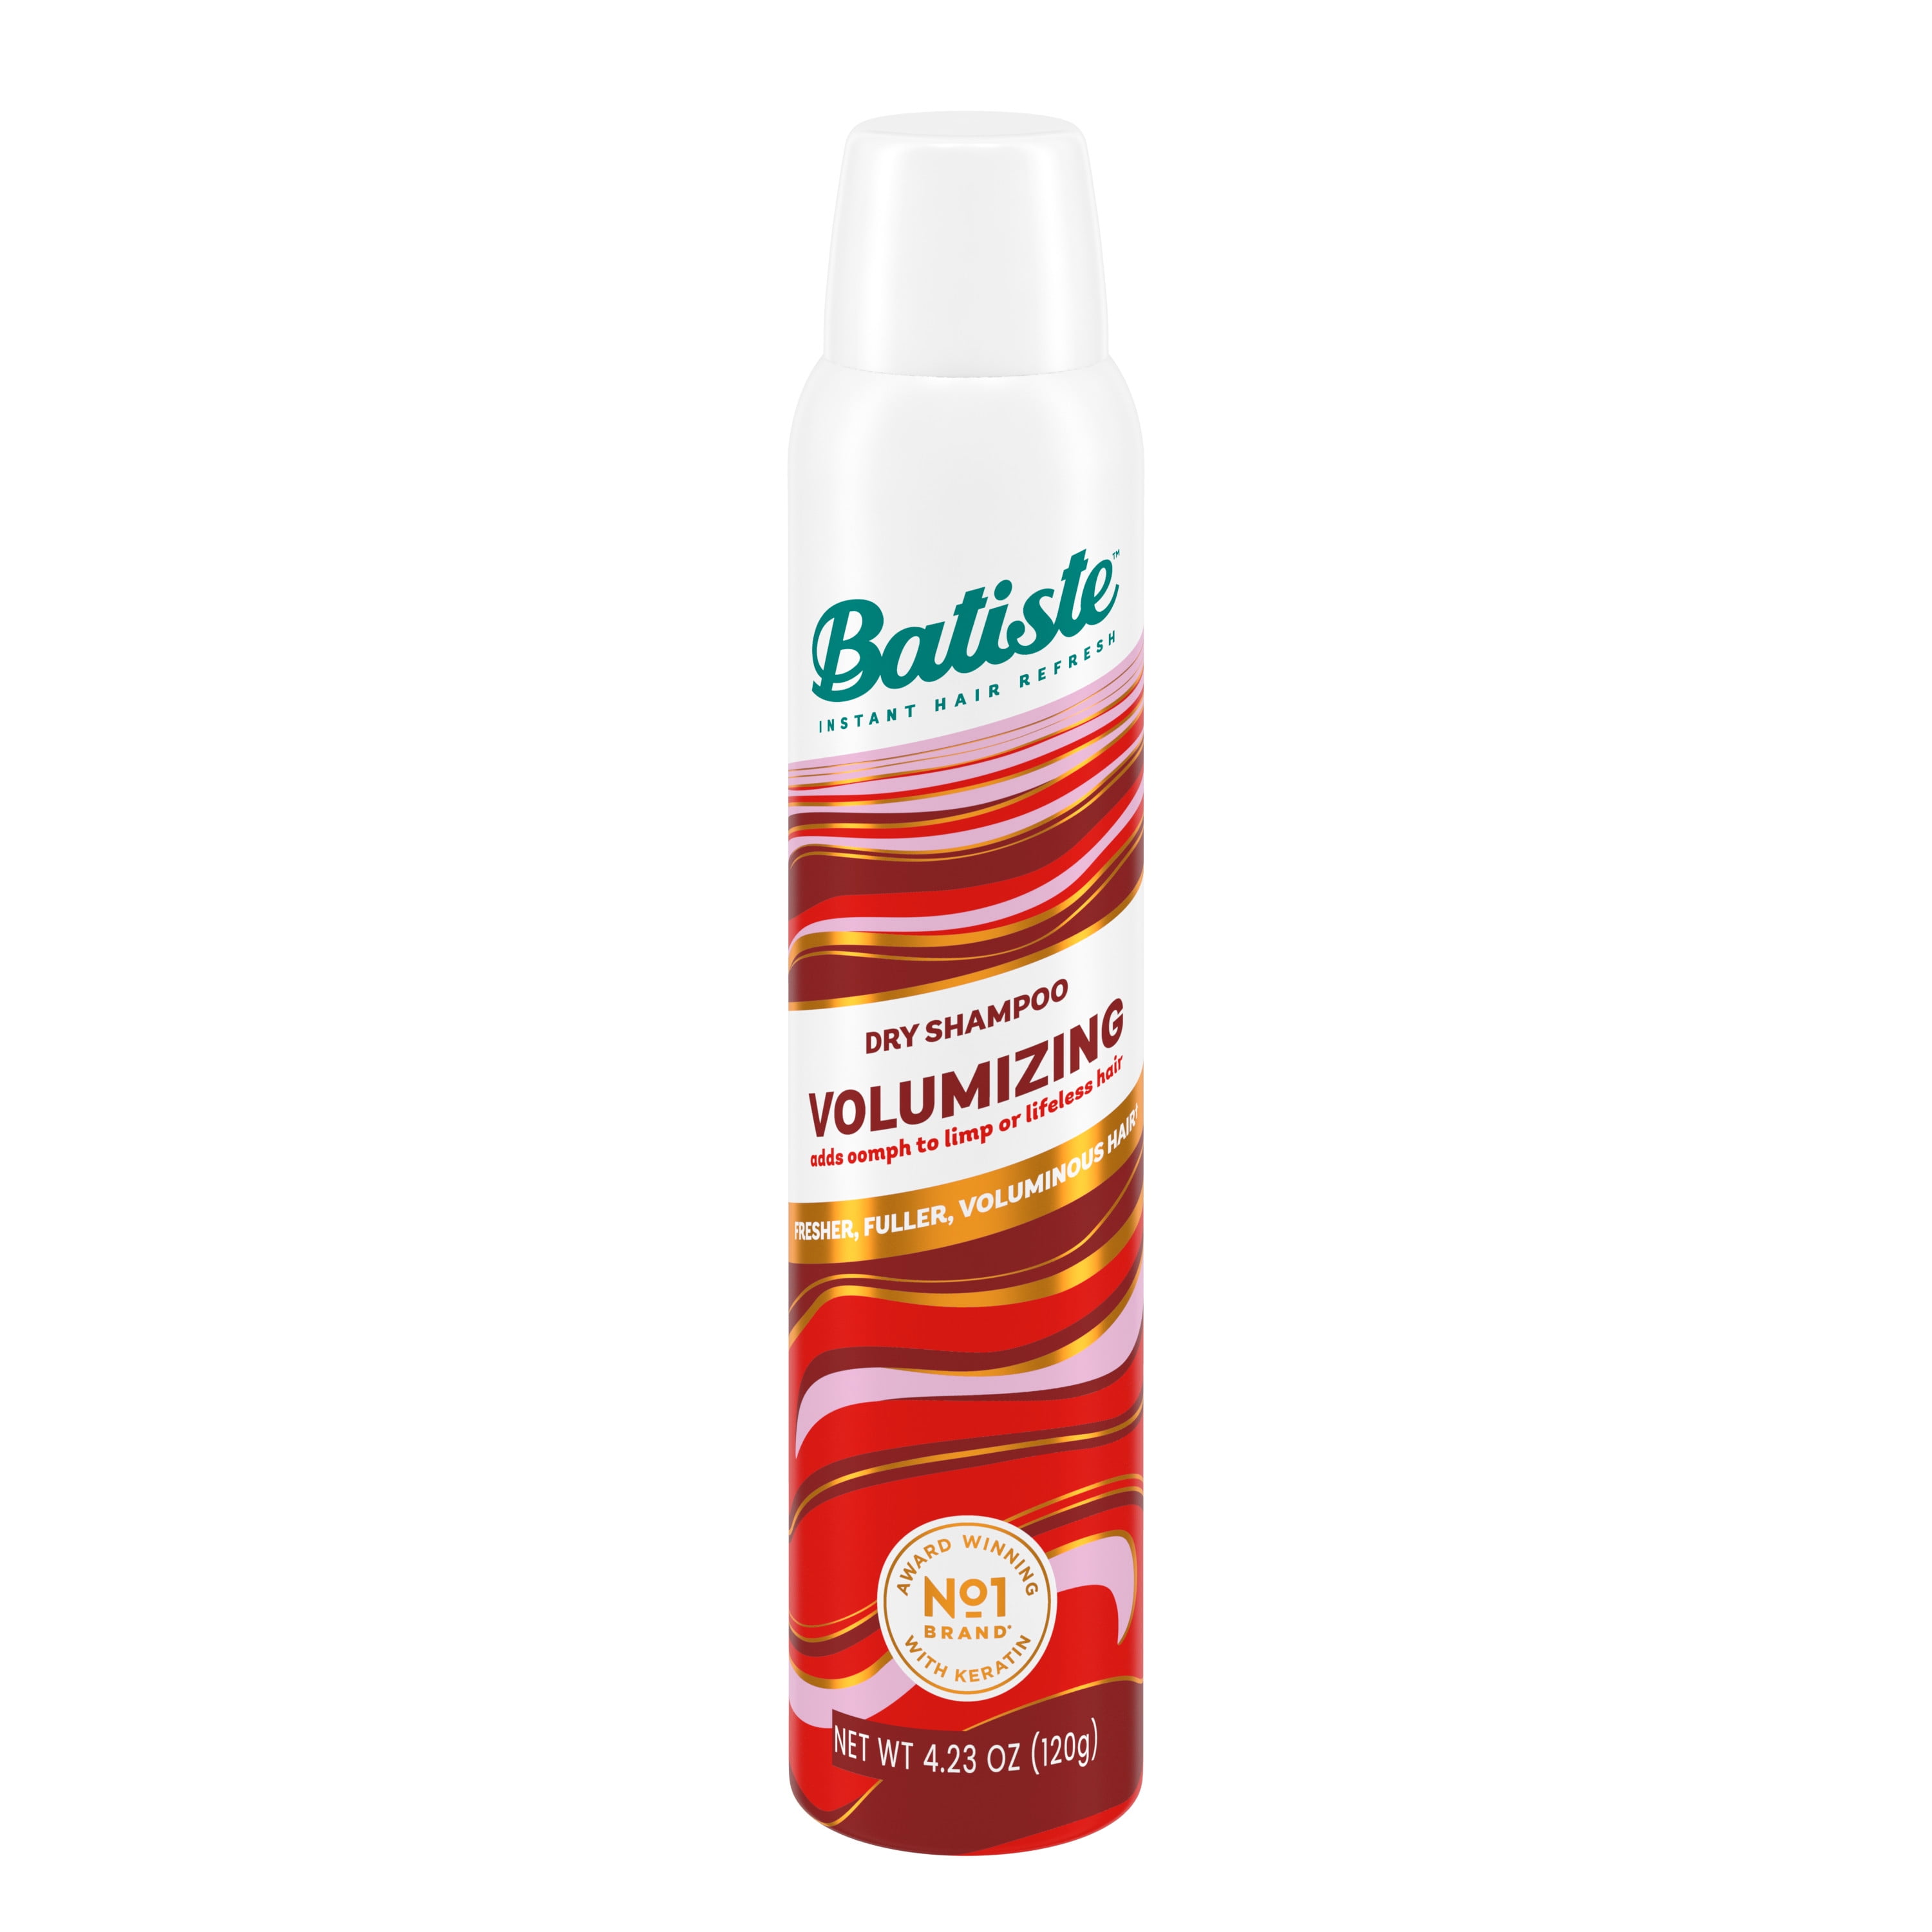 ulv Syd Omsorg Batiste Dry Shampoo, Volumizing, 4.23 OZ. - Walmart.com